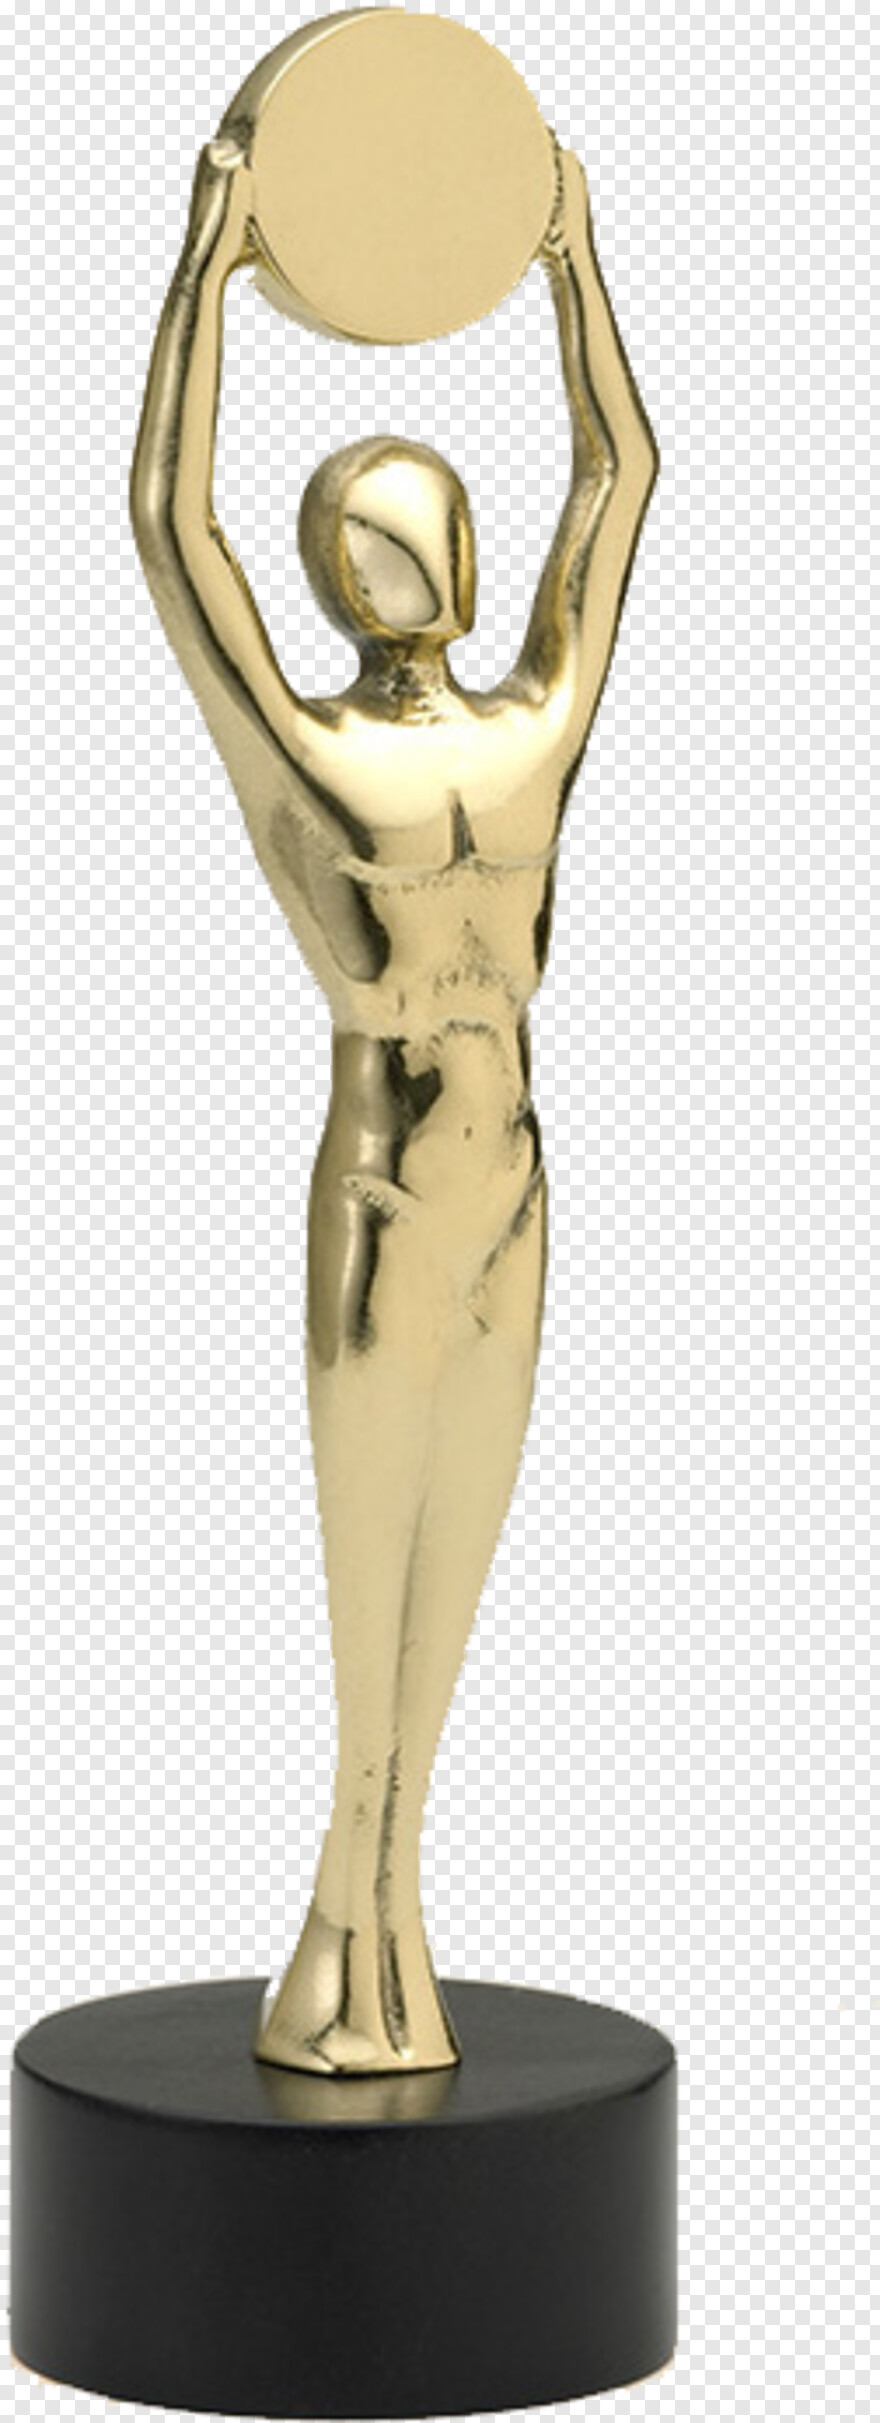 oscar-award # 318312